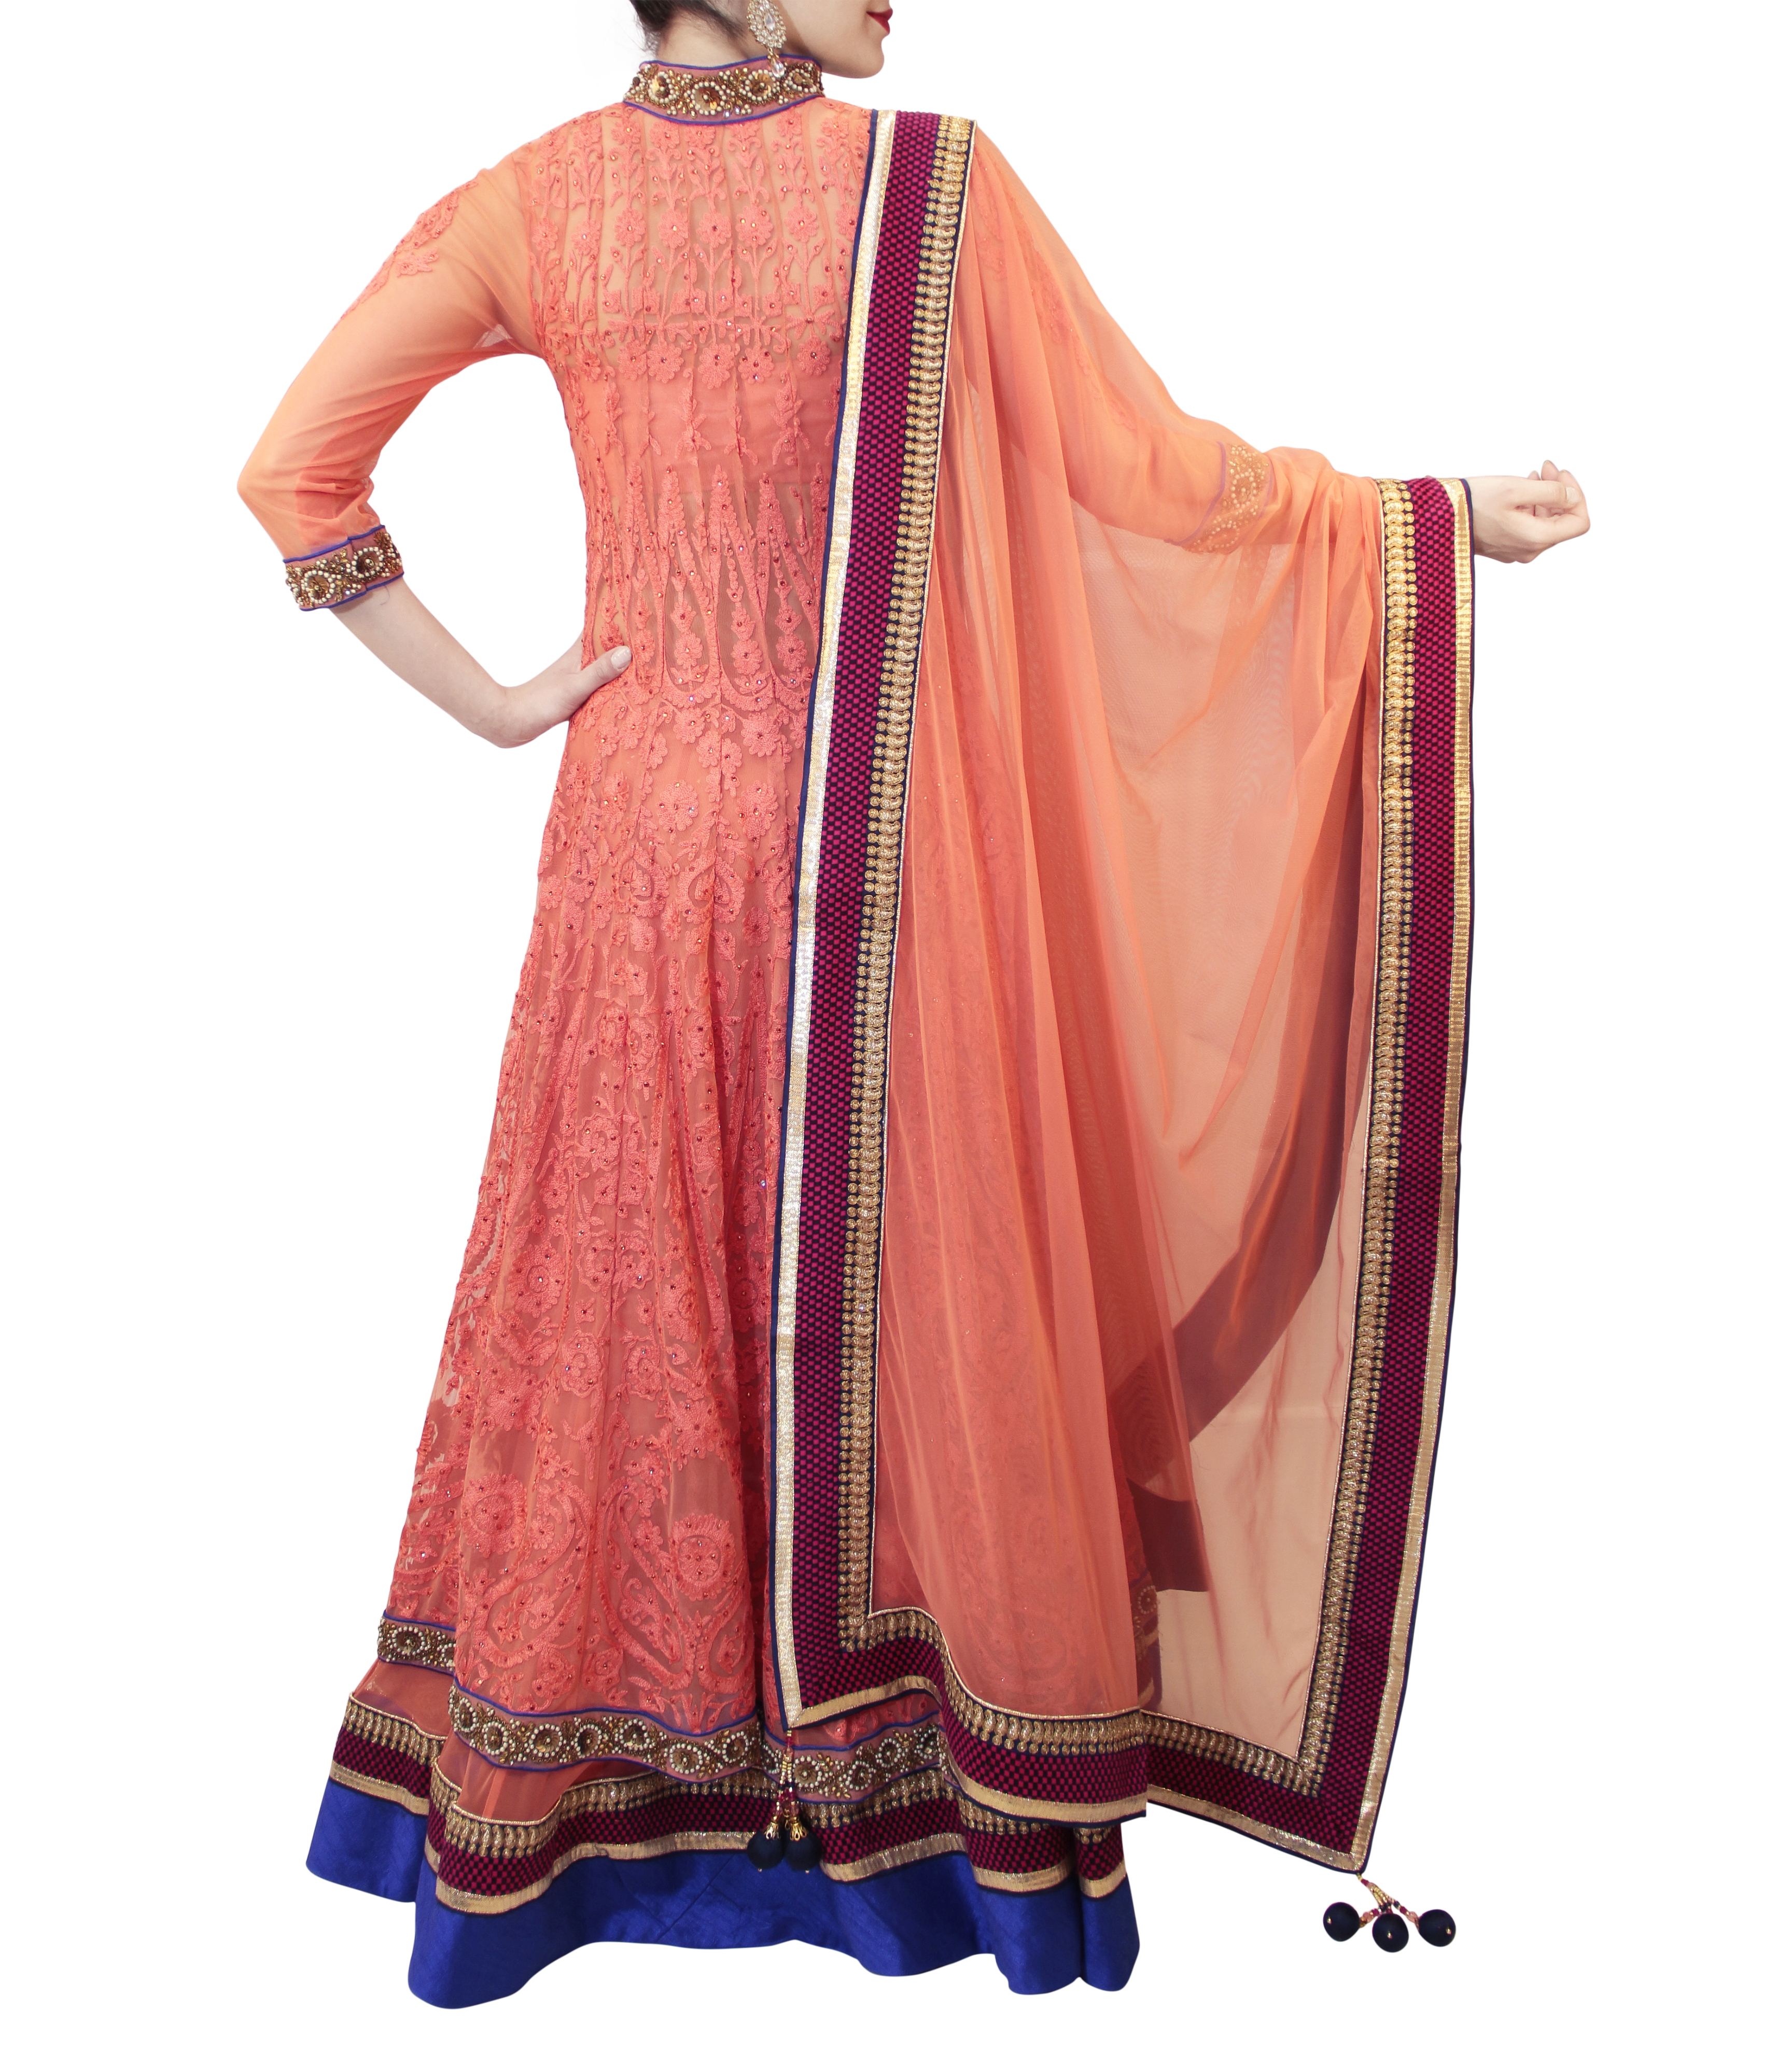 lacha dress for girl photo – Page 4 – Joshindia